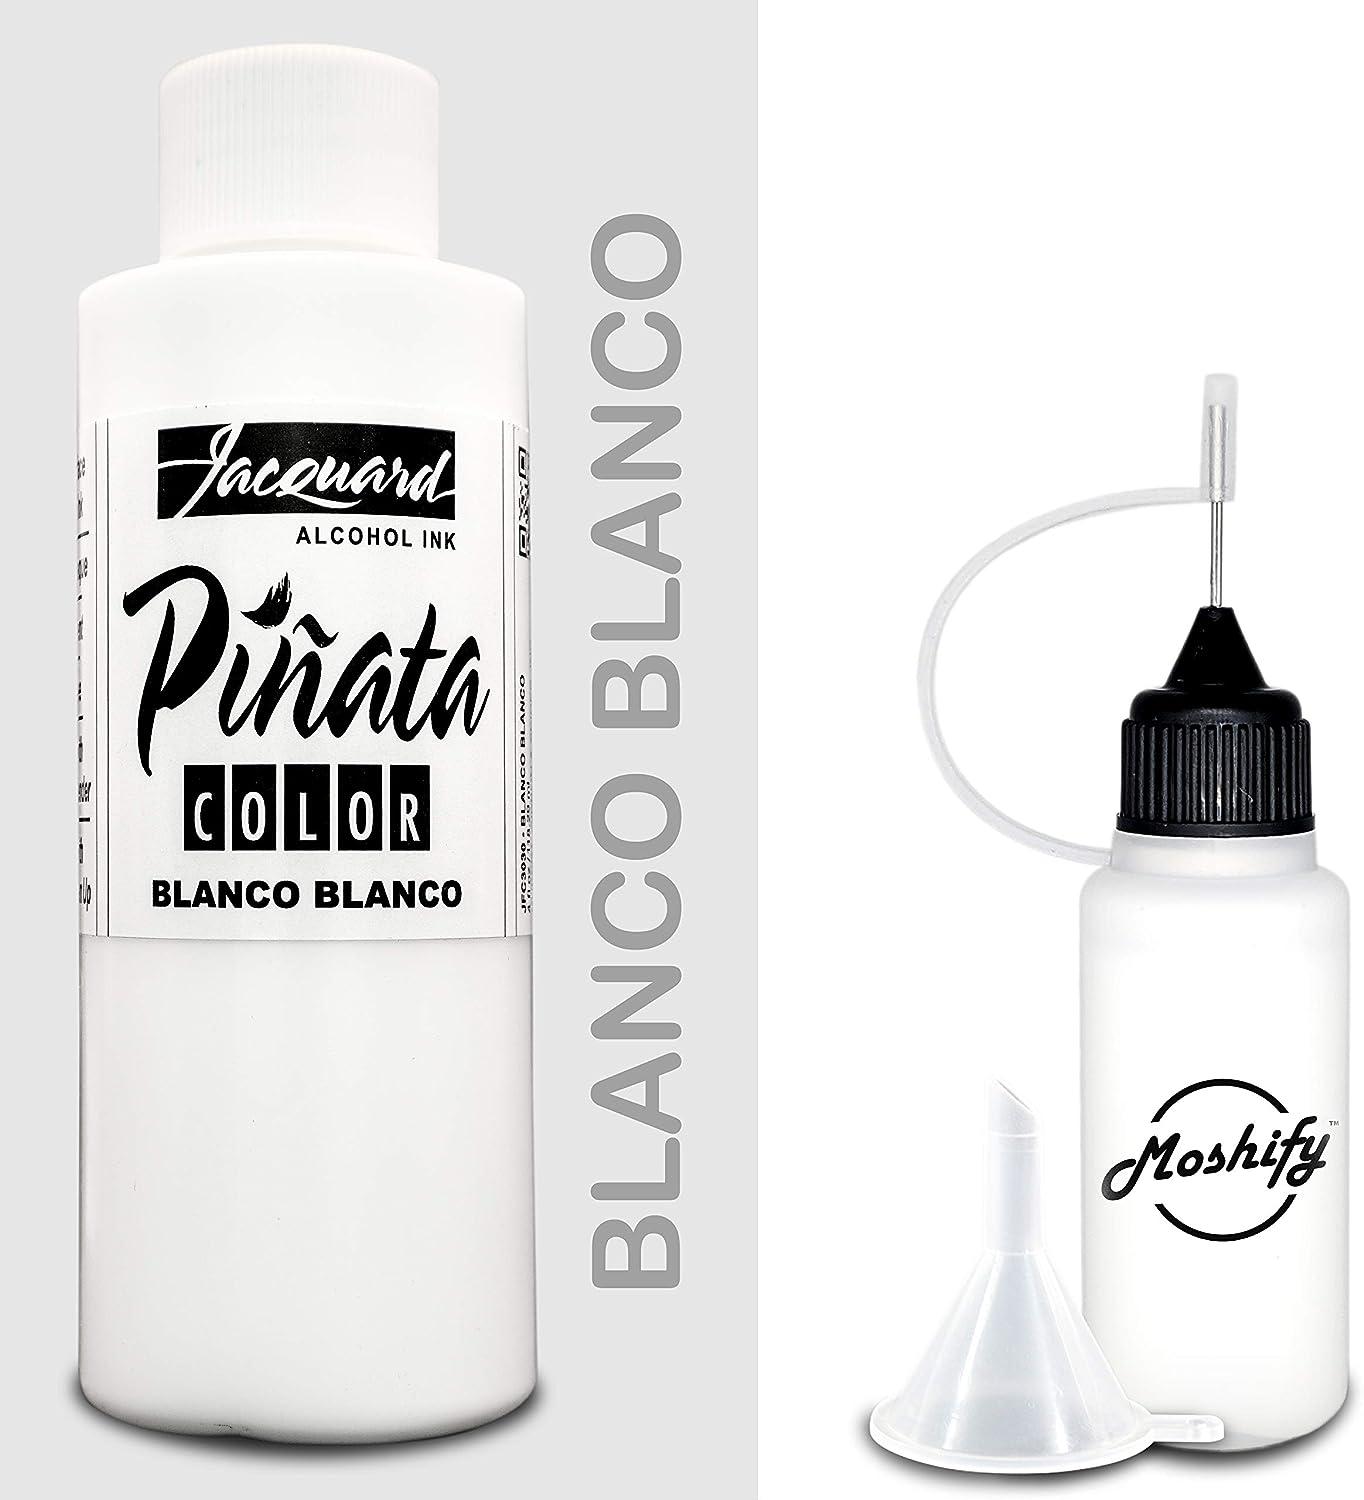 Jacquard Pinata White Alcohol Ink Made in USA - Blanco Blanco